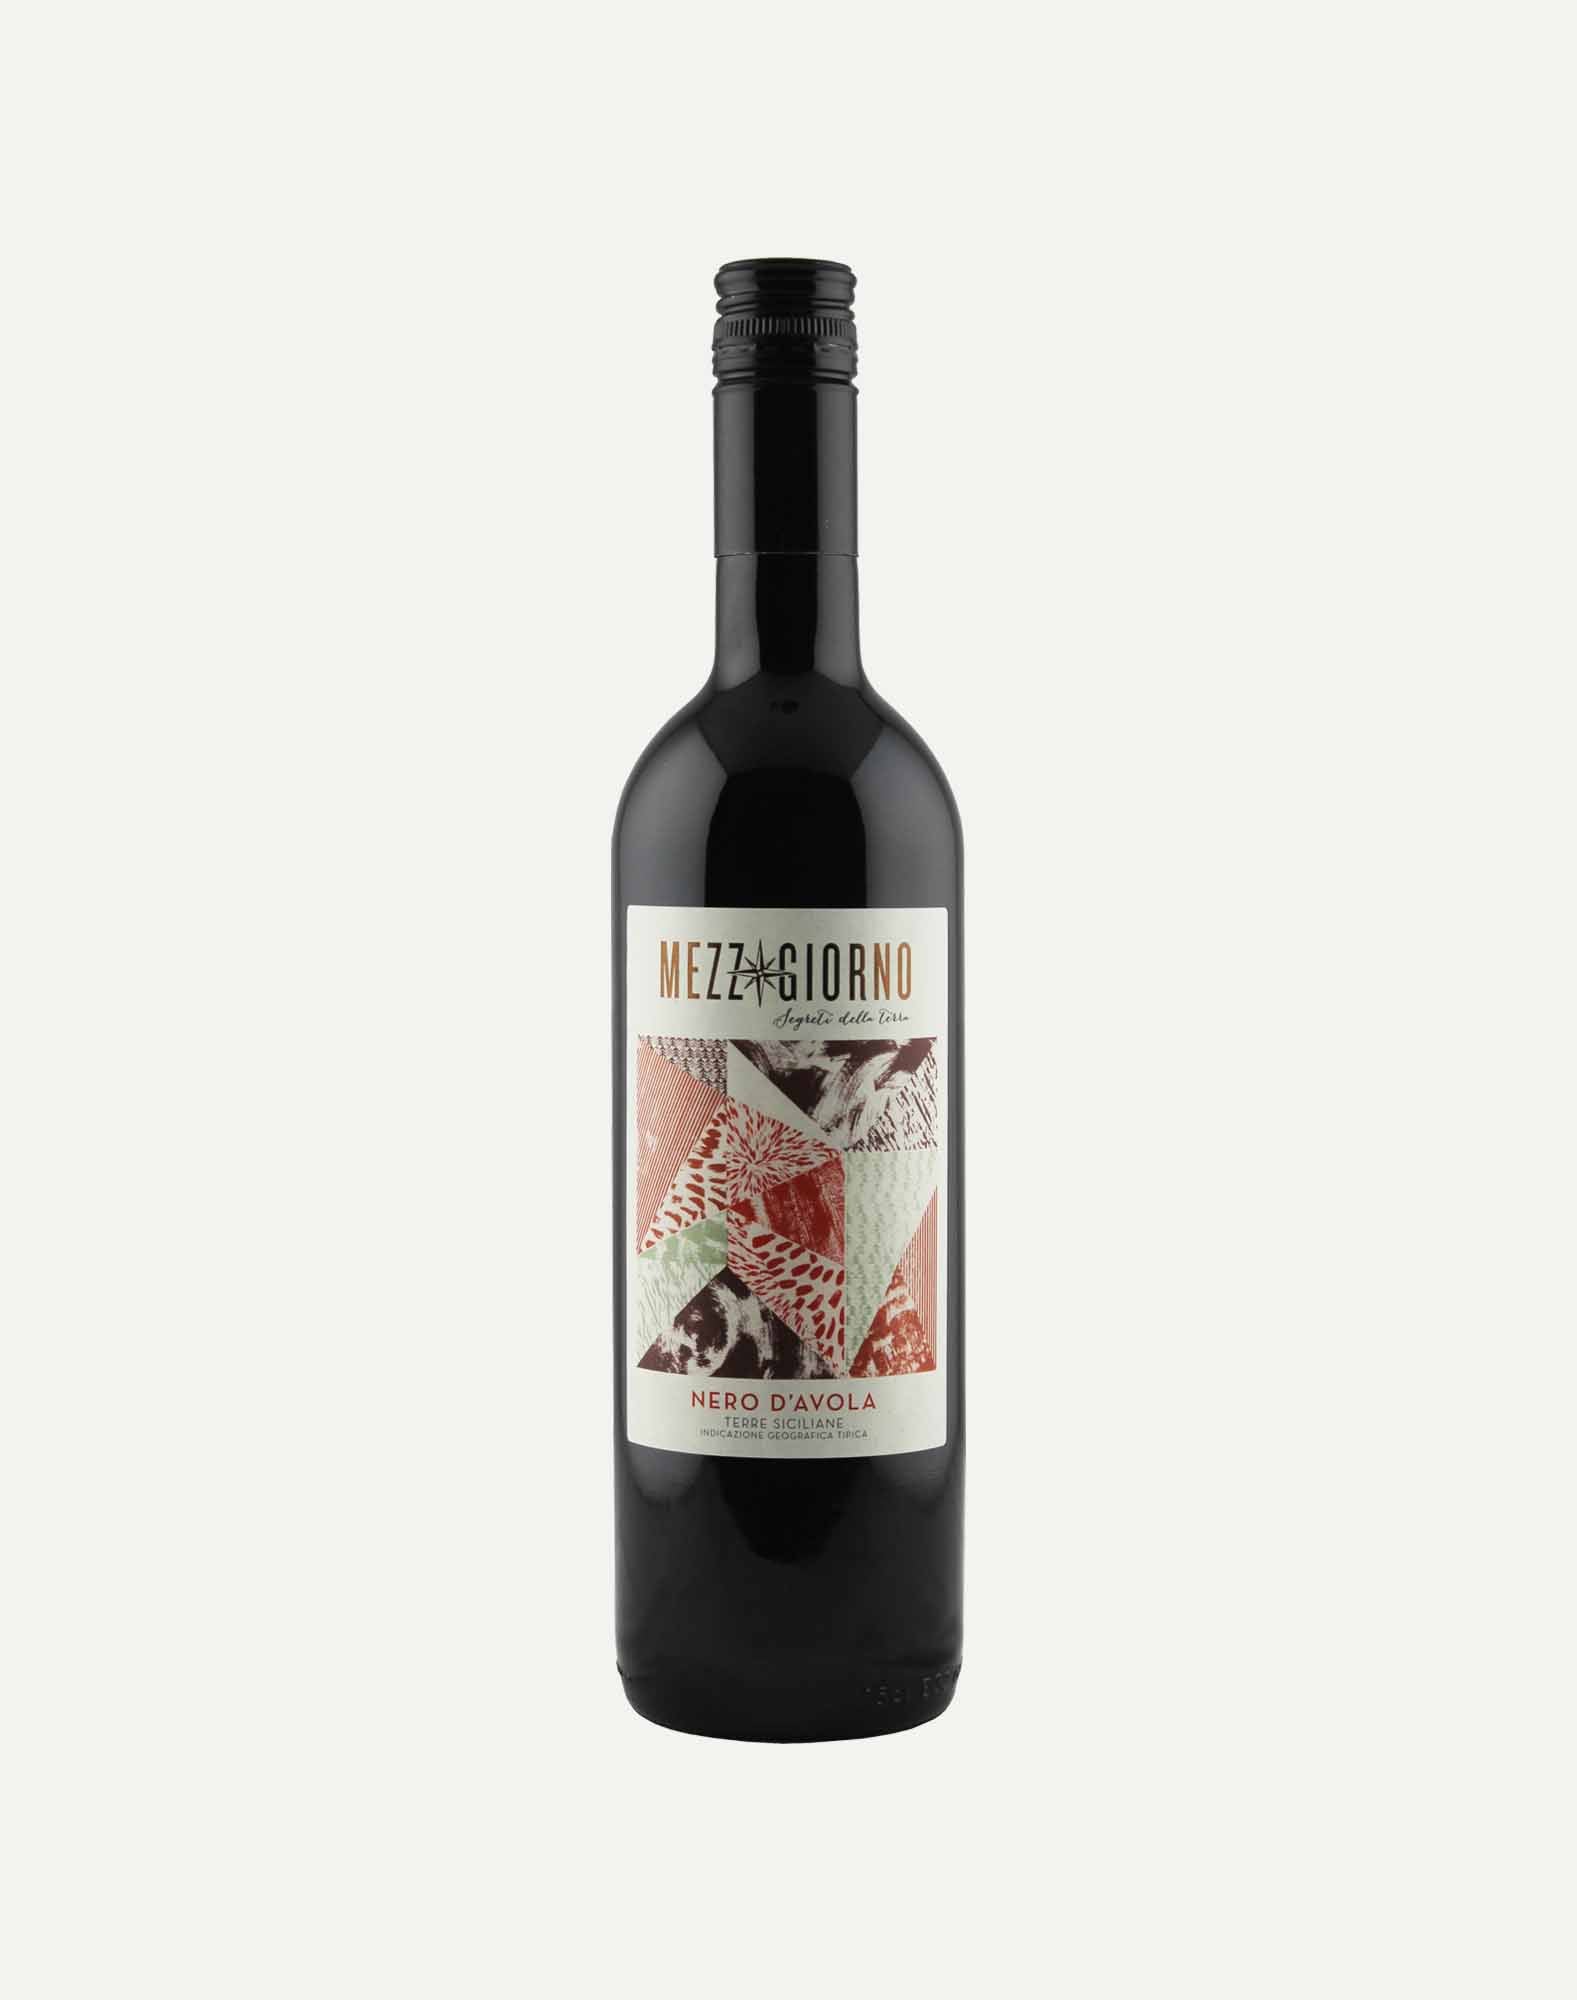 6 bottles of Nero d'Avola, Mezzogiorno red wine (£6.65 per bottle)